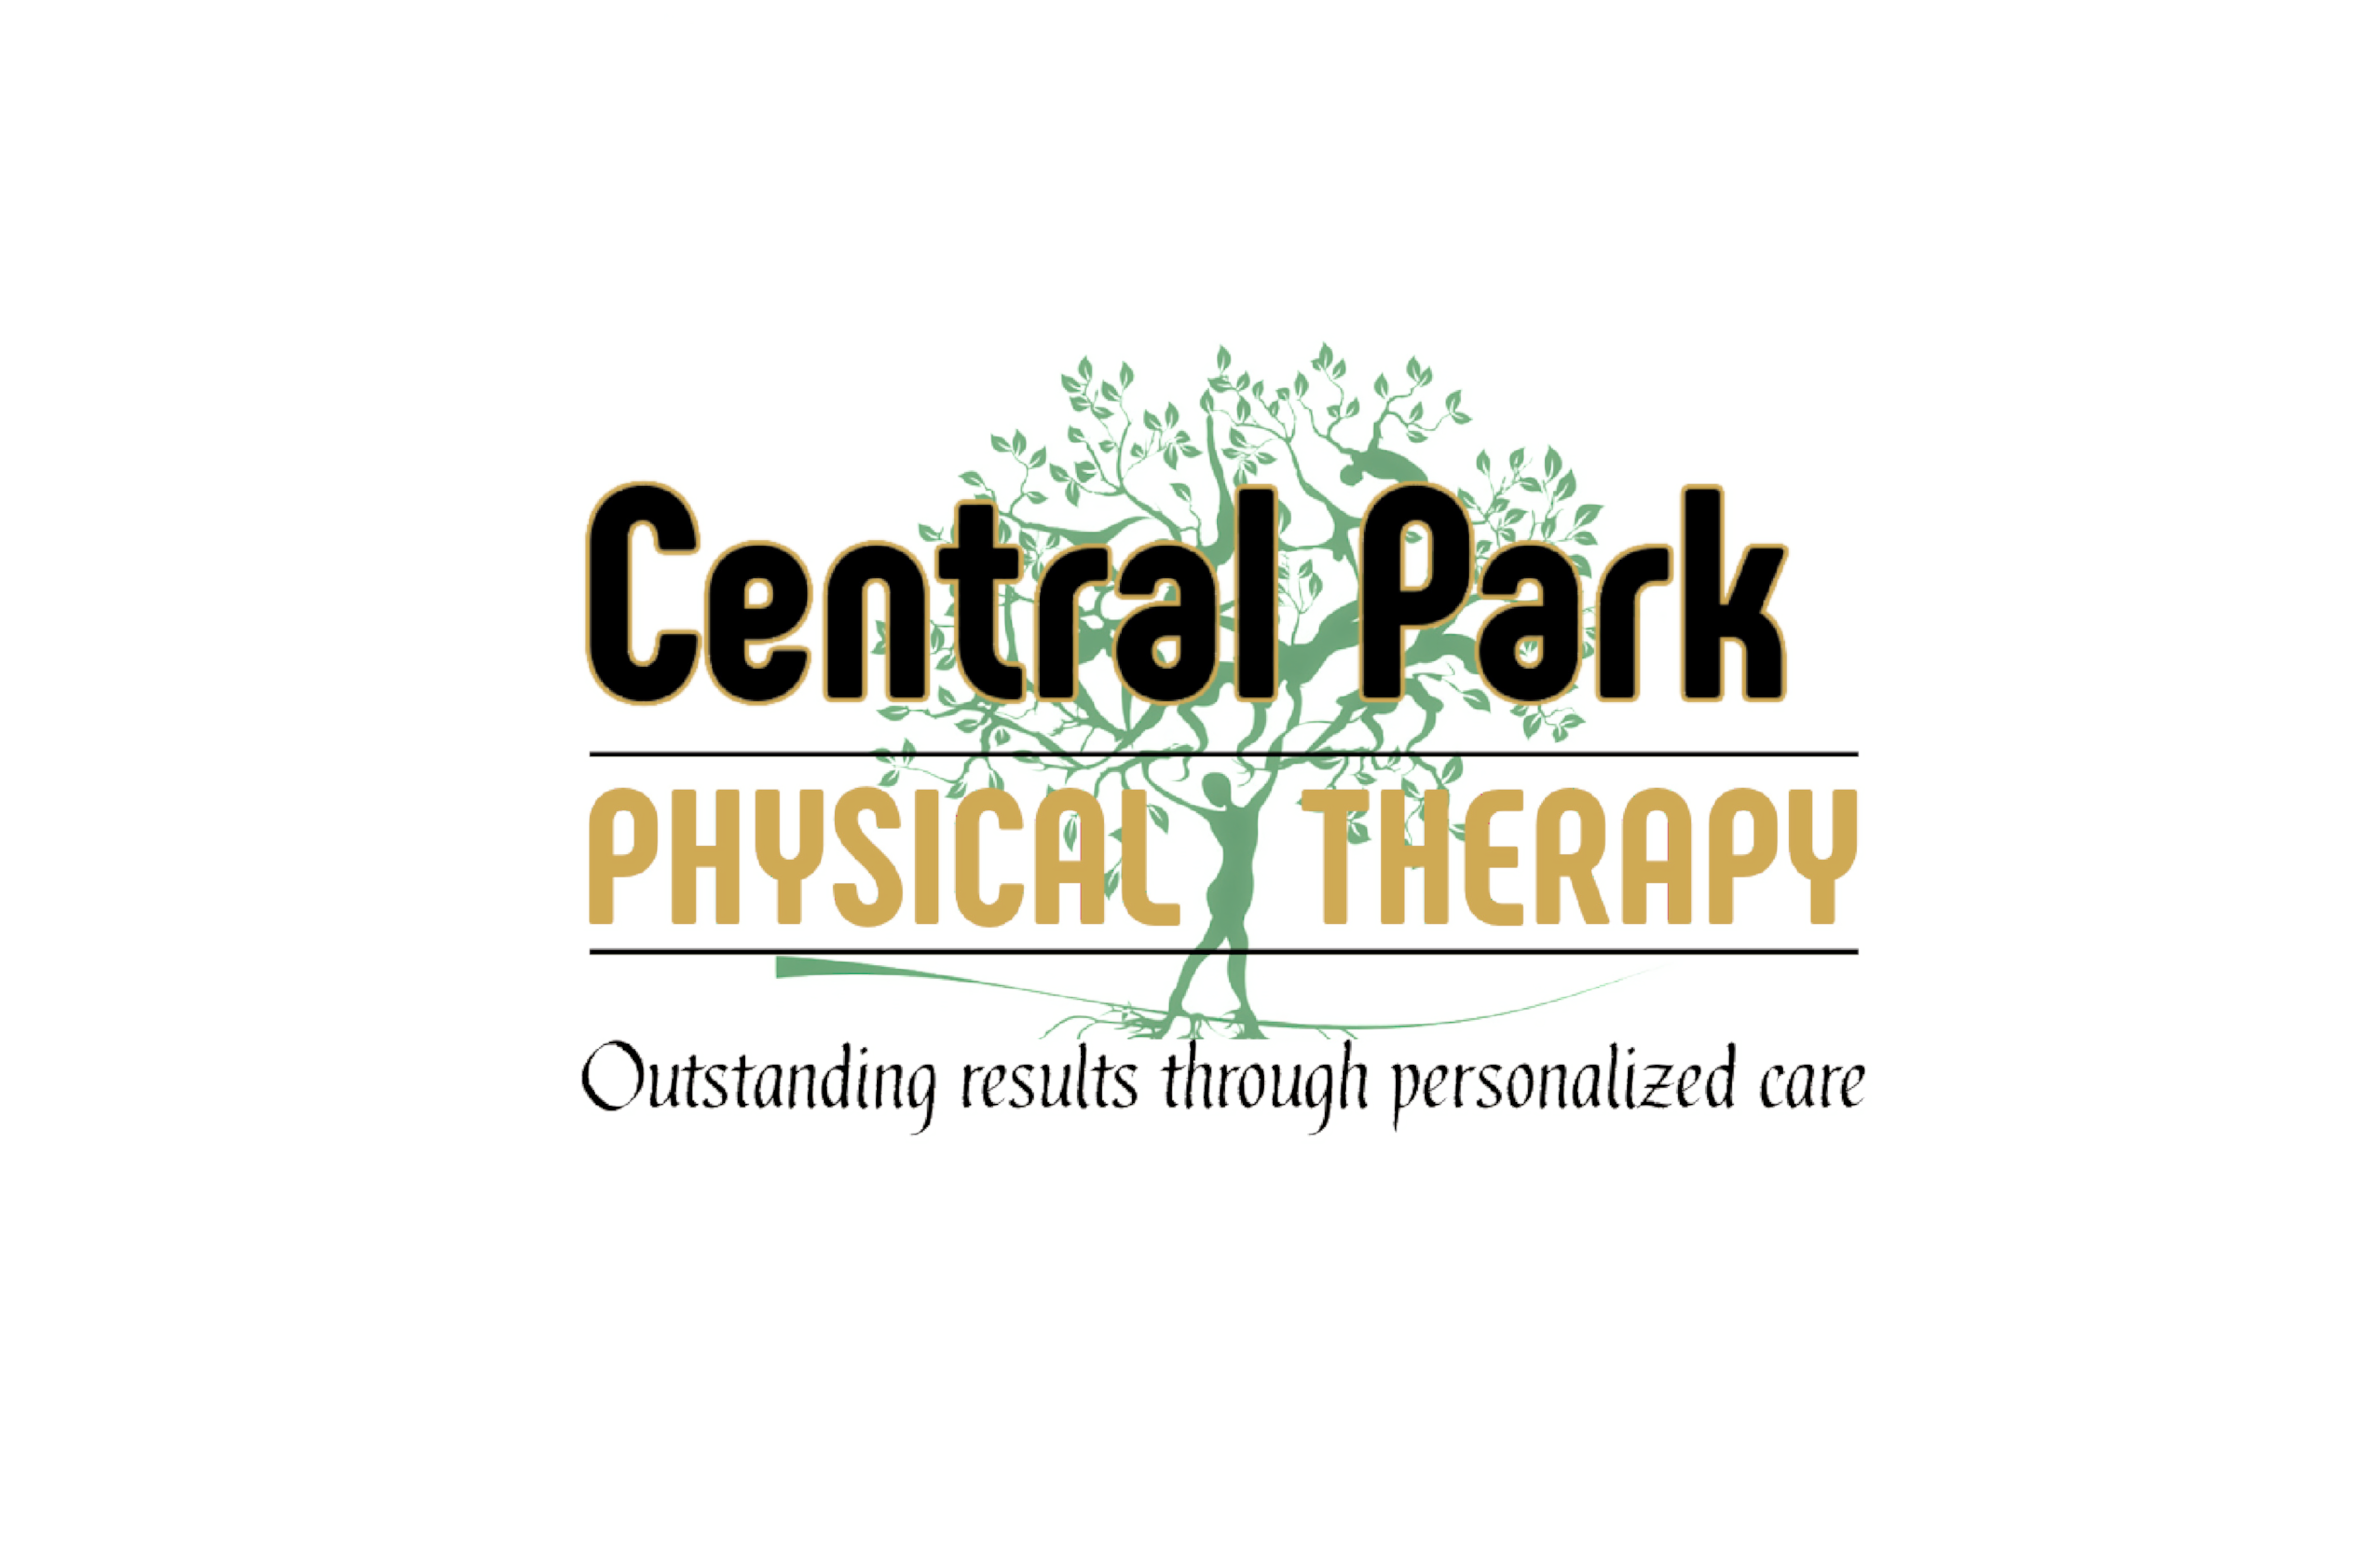 Efaz Physiotherapy & Rehabilitation Center - Future Care Discount Card